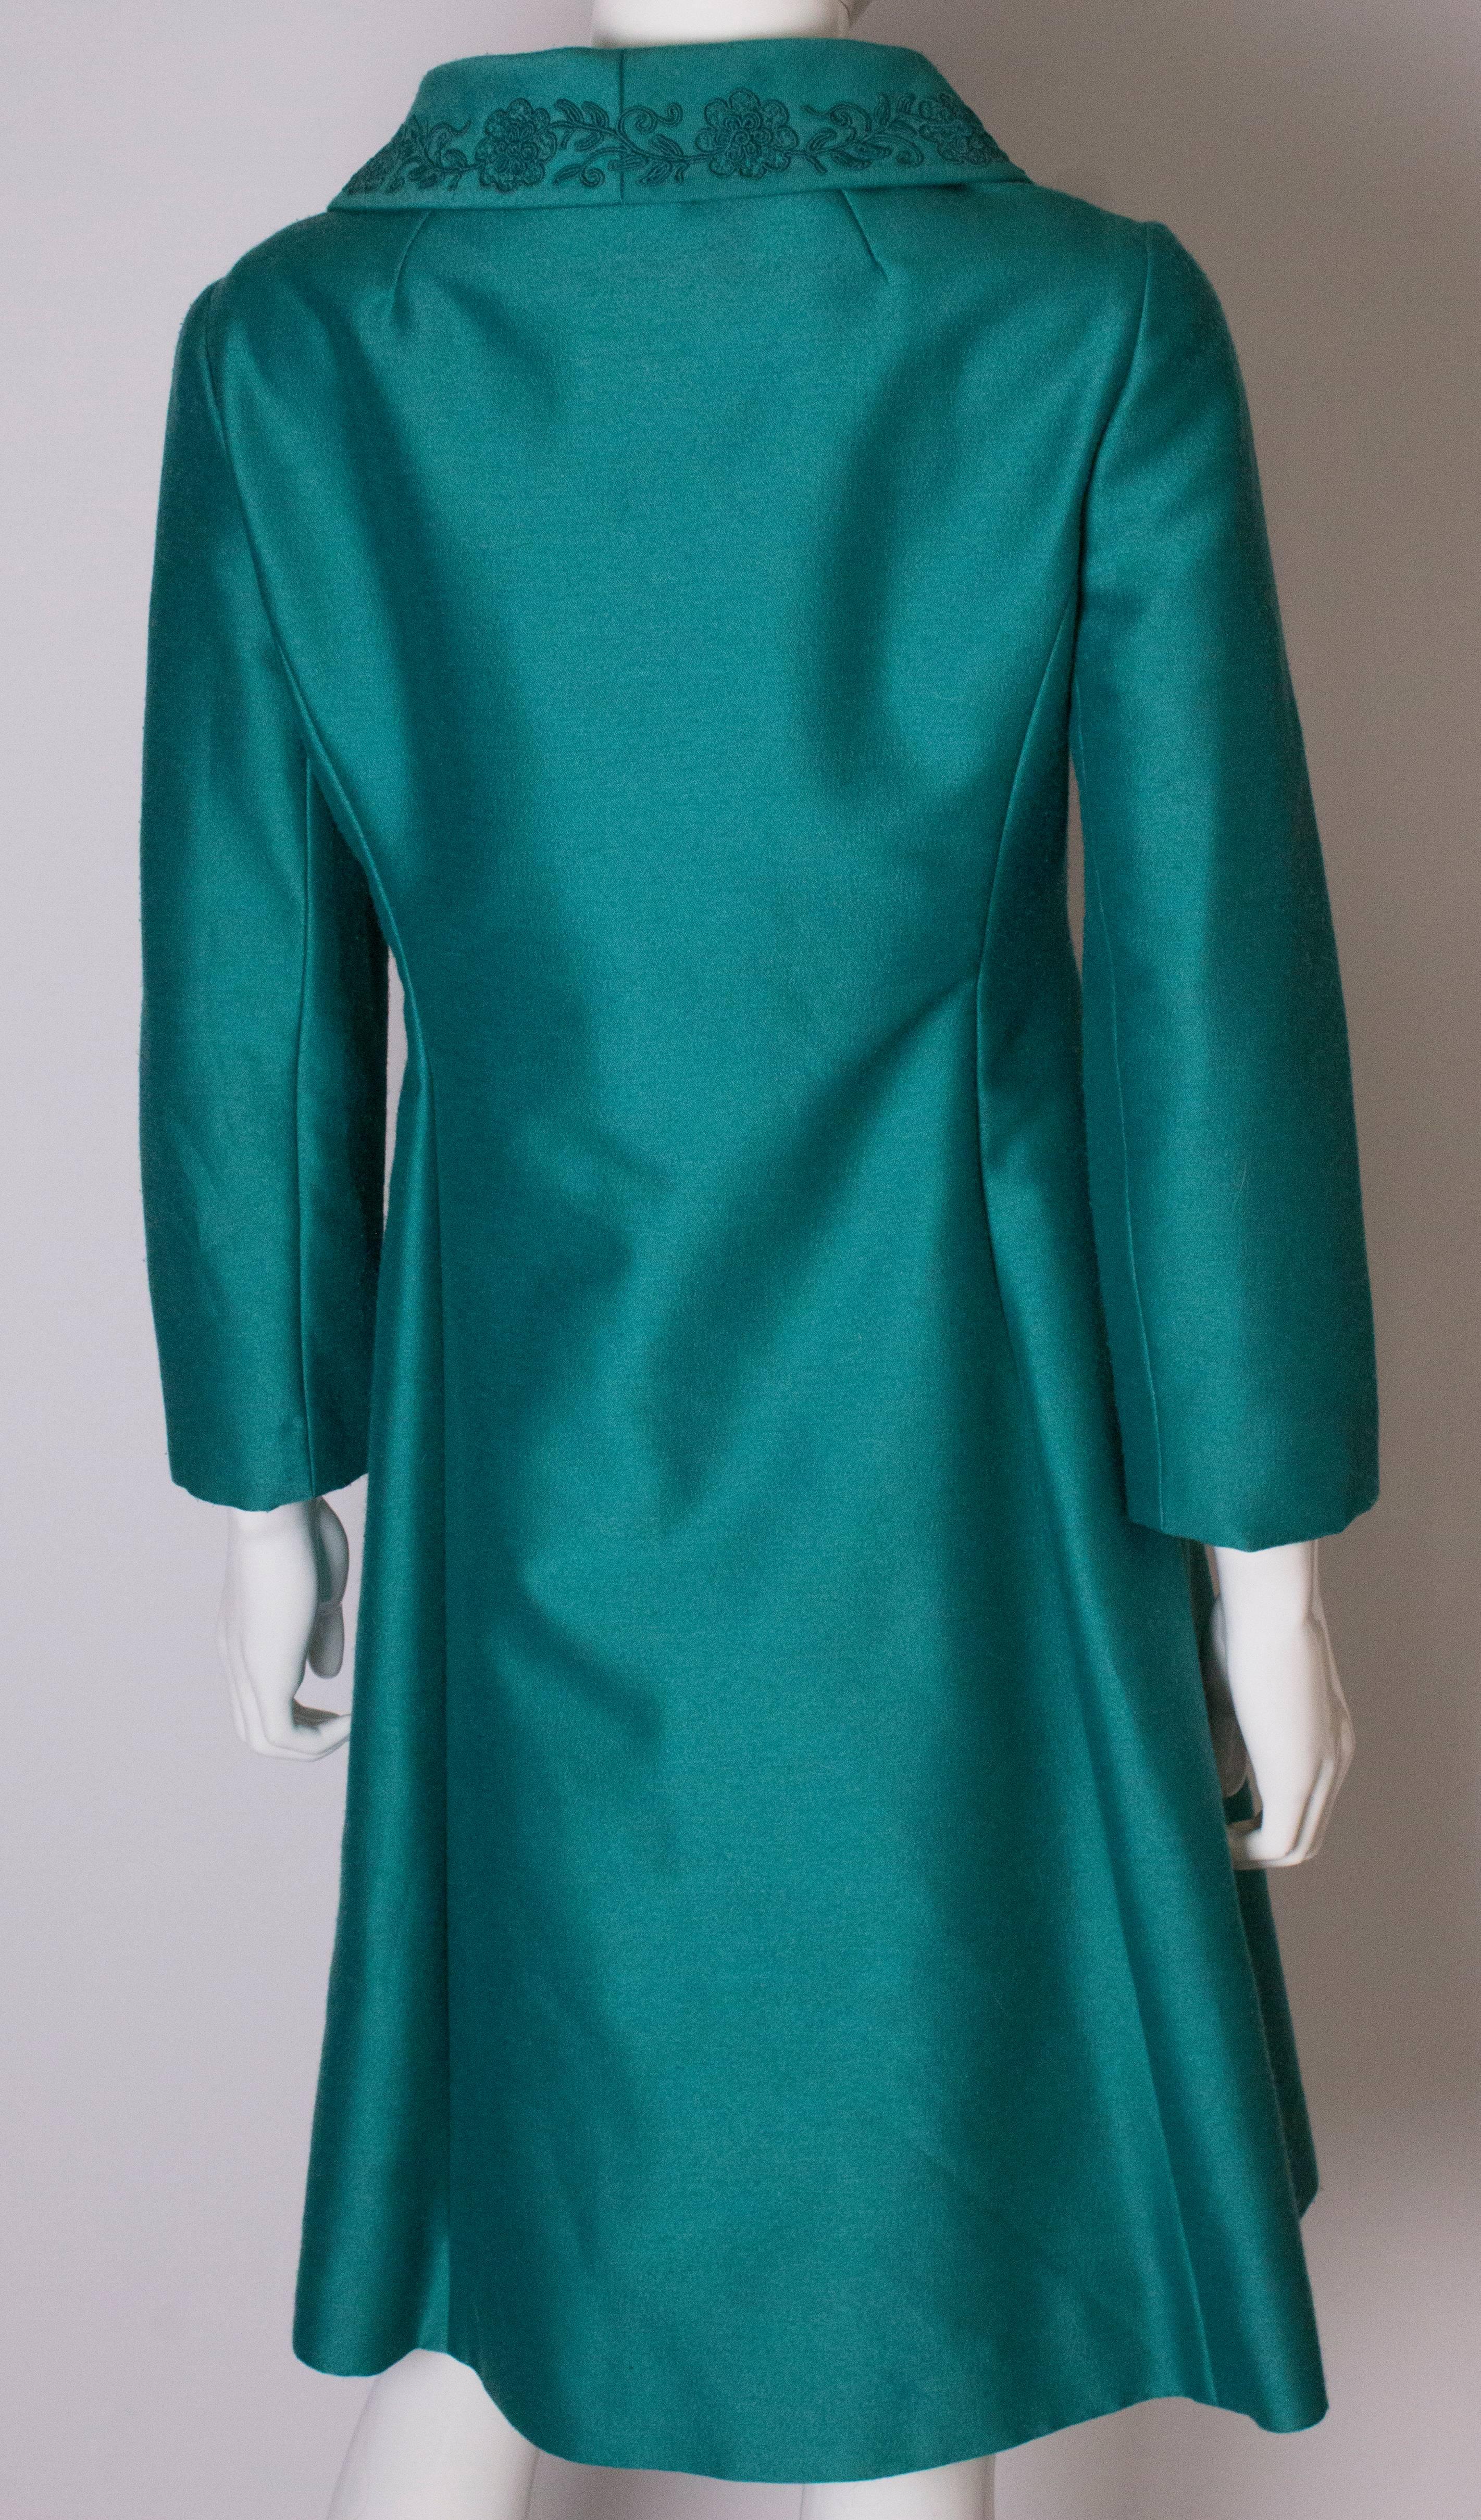 A Vintage 1960s Teal Coloured Evening Coat For Sale 1